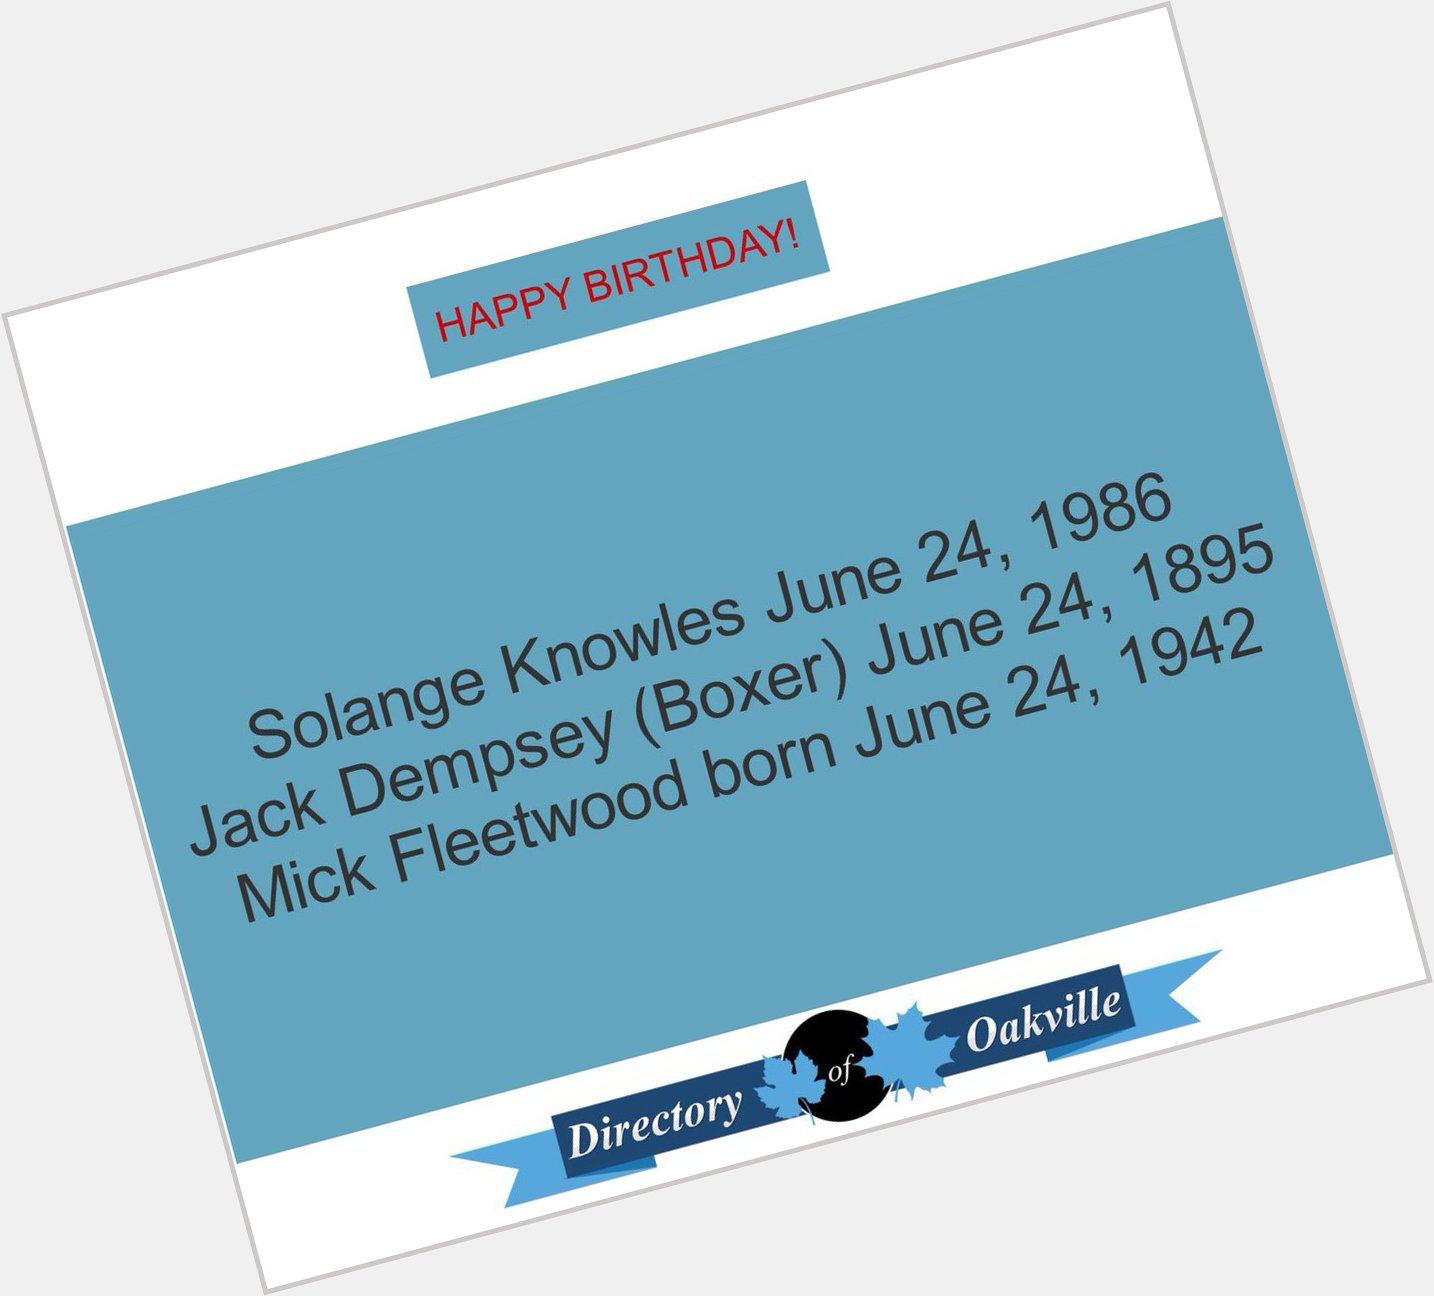 HAPPY BIRTHDAY!
Solange Knowles June 24, 1986
Jack Dempsey (Boxer) June 24, 1895
Mick Fleetwood born June 24, 1942 